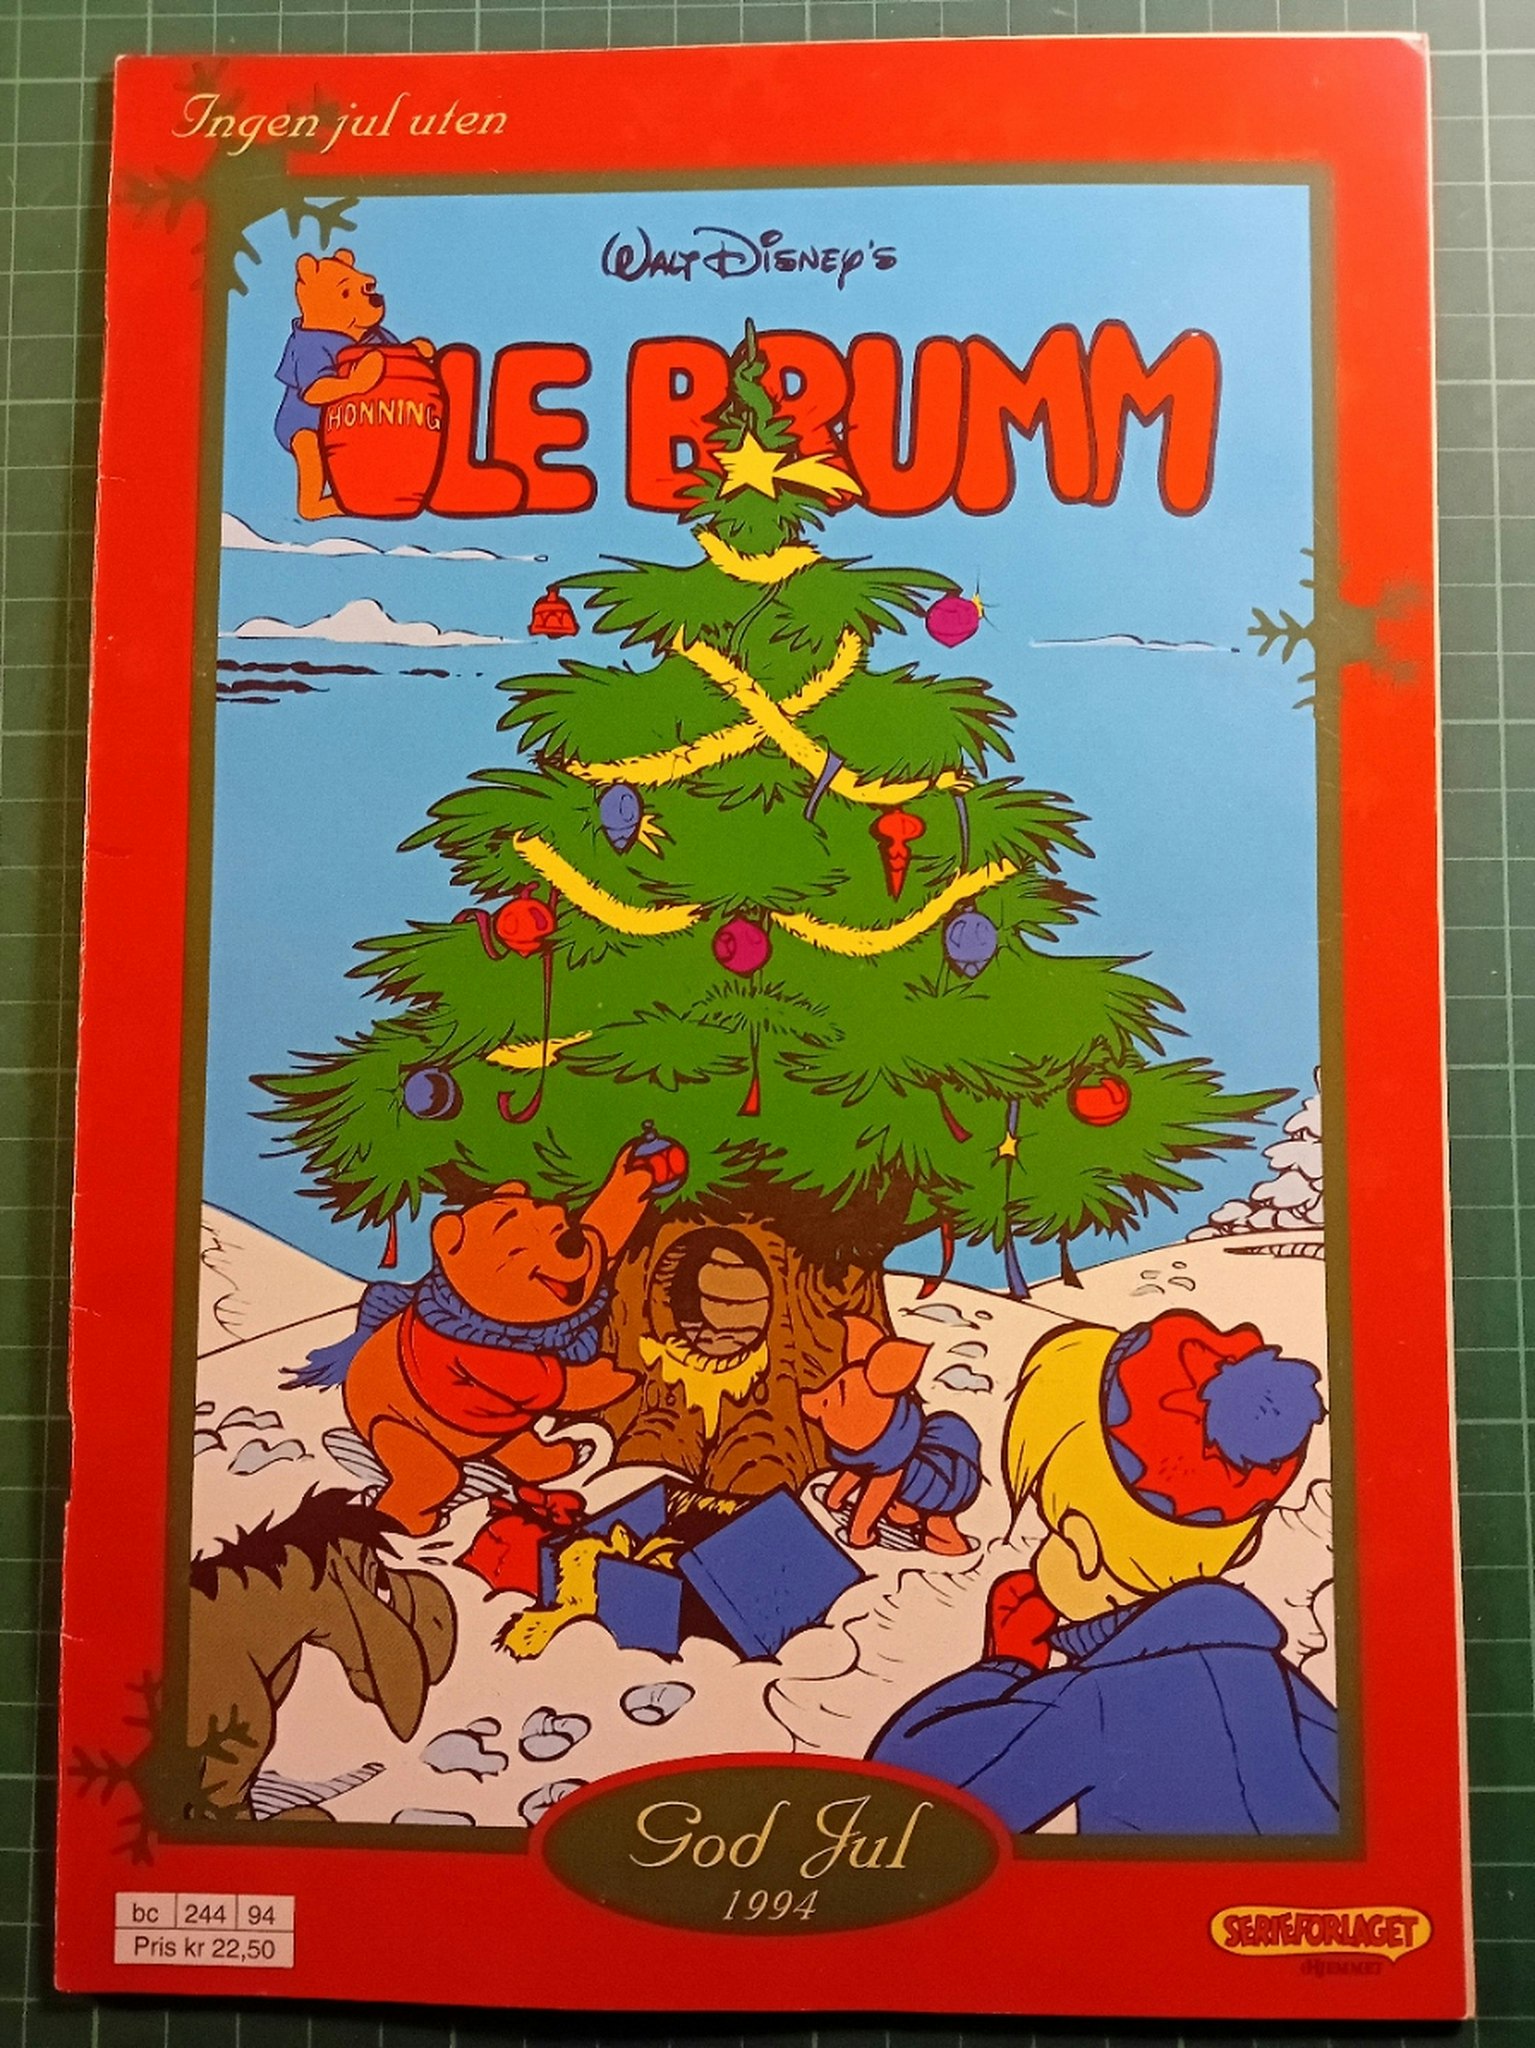 Ole Brumm Julen 1994